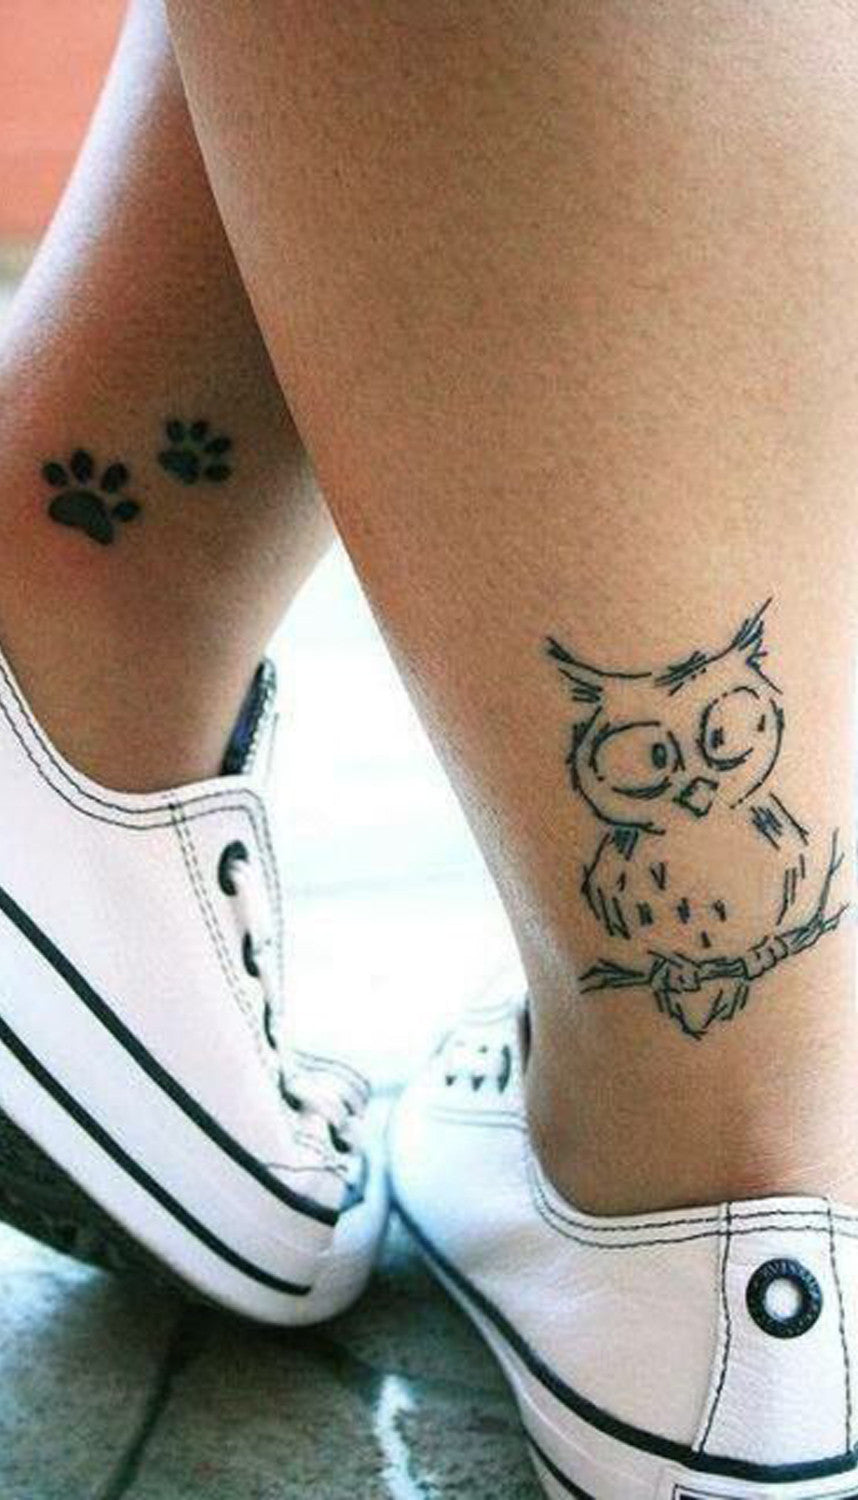 Cute Small Owl Leg Tattoo Ideas - Dog Paw Prints Ankle Tats - MyBodiArt.com